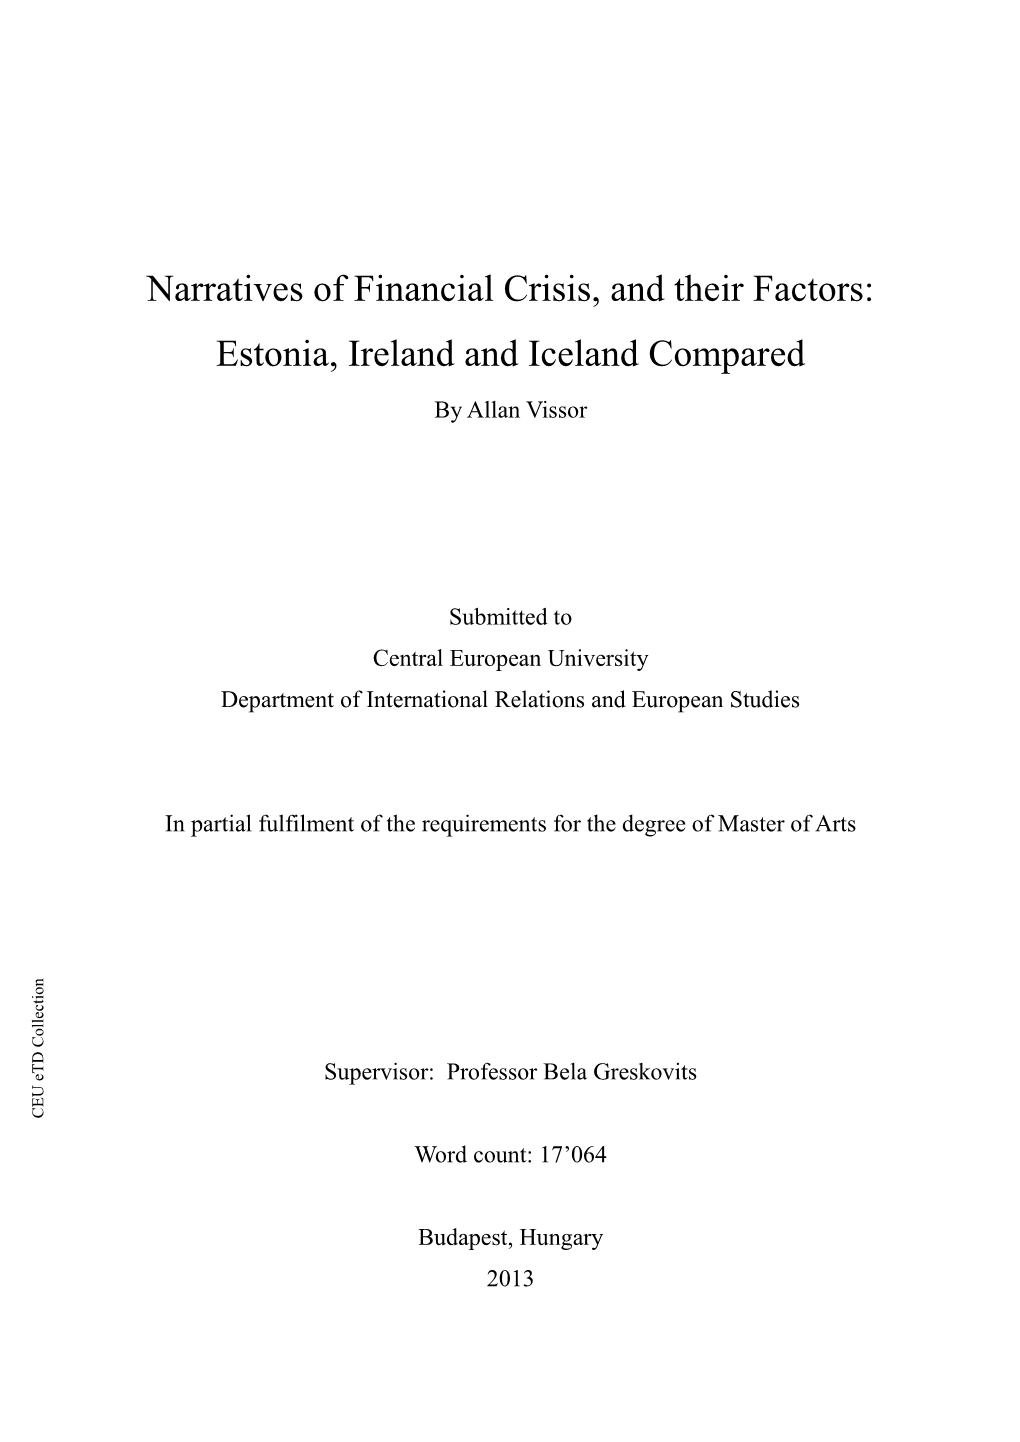 Estonia, Ireland and Iceland in Financial Crisis